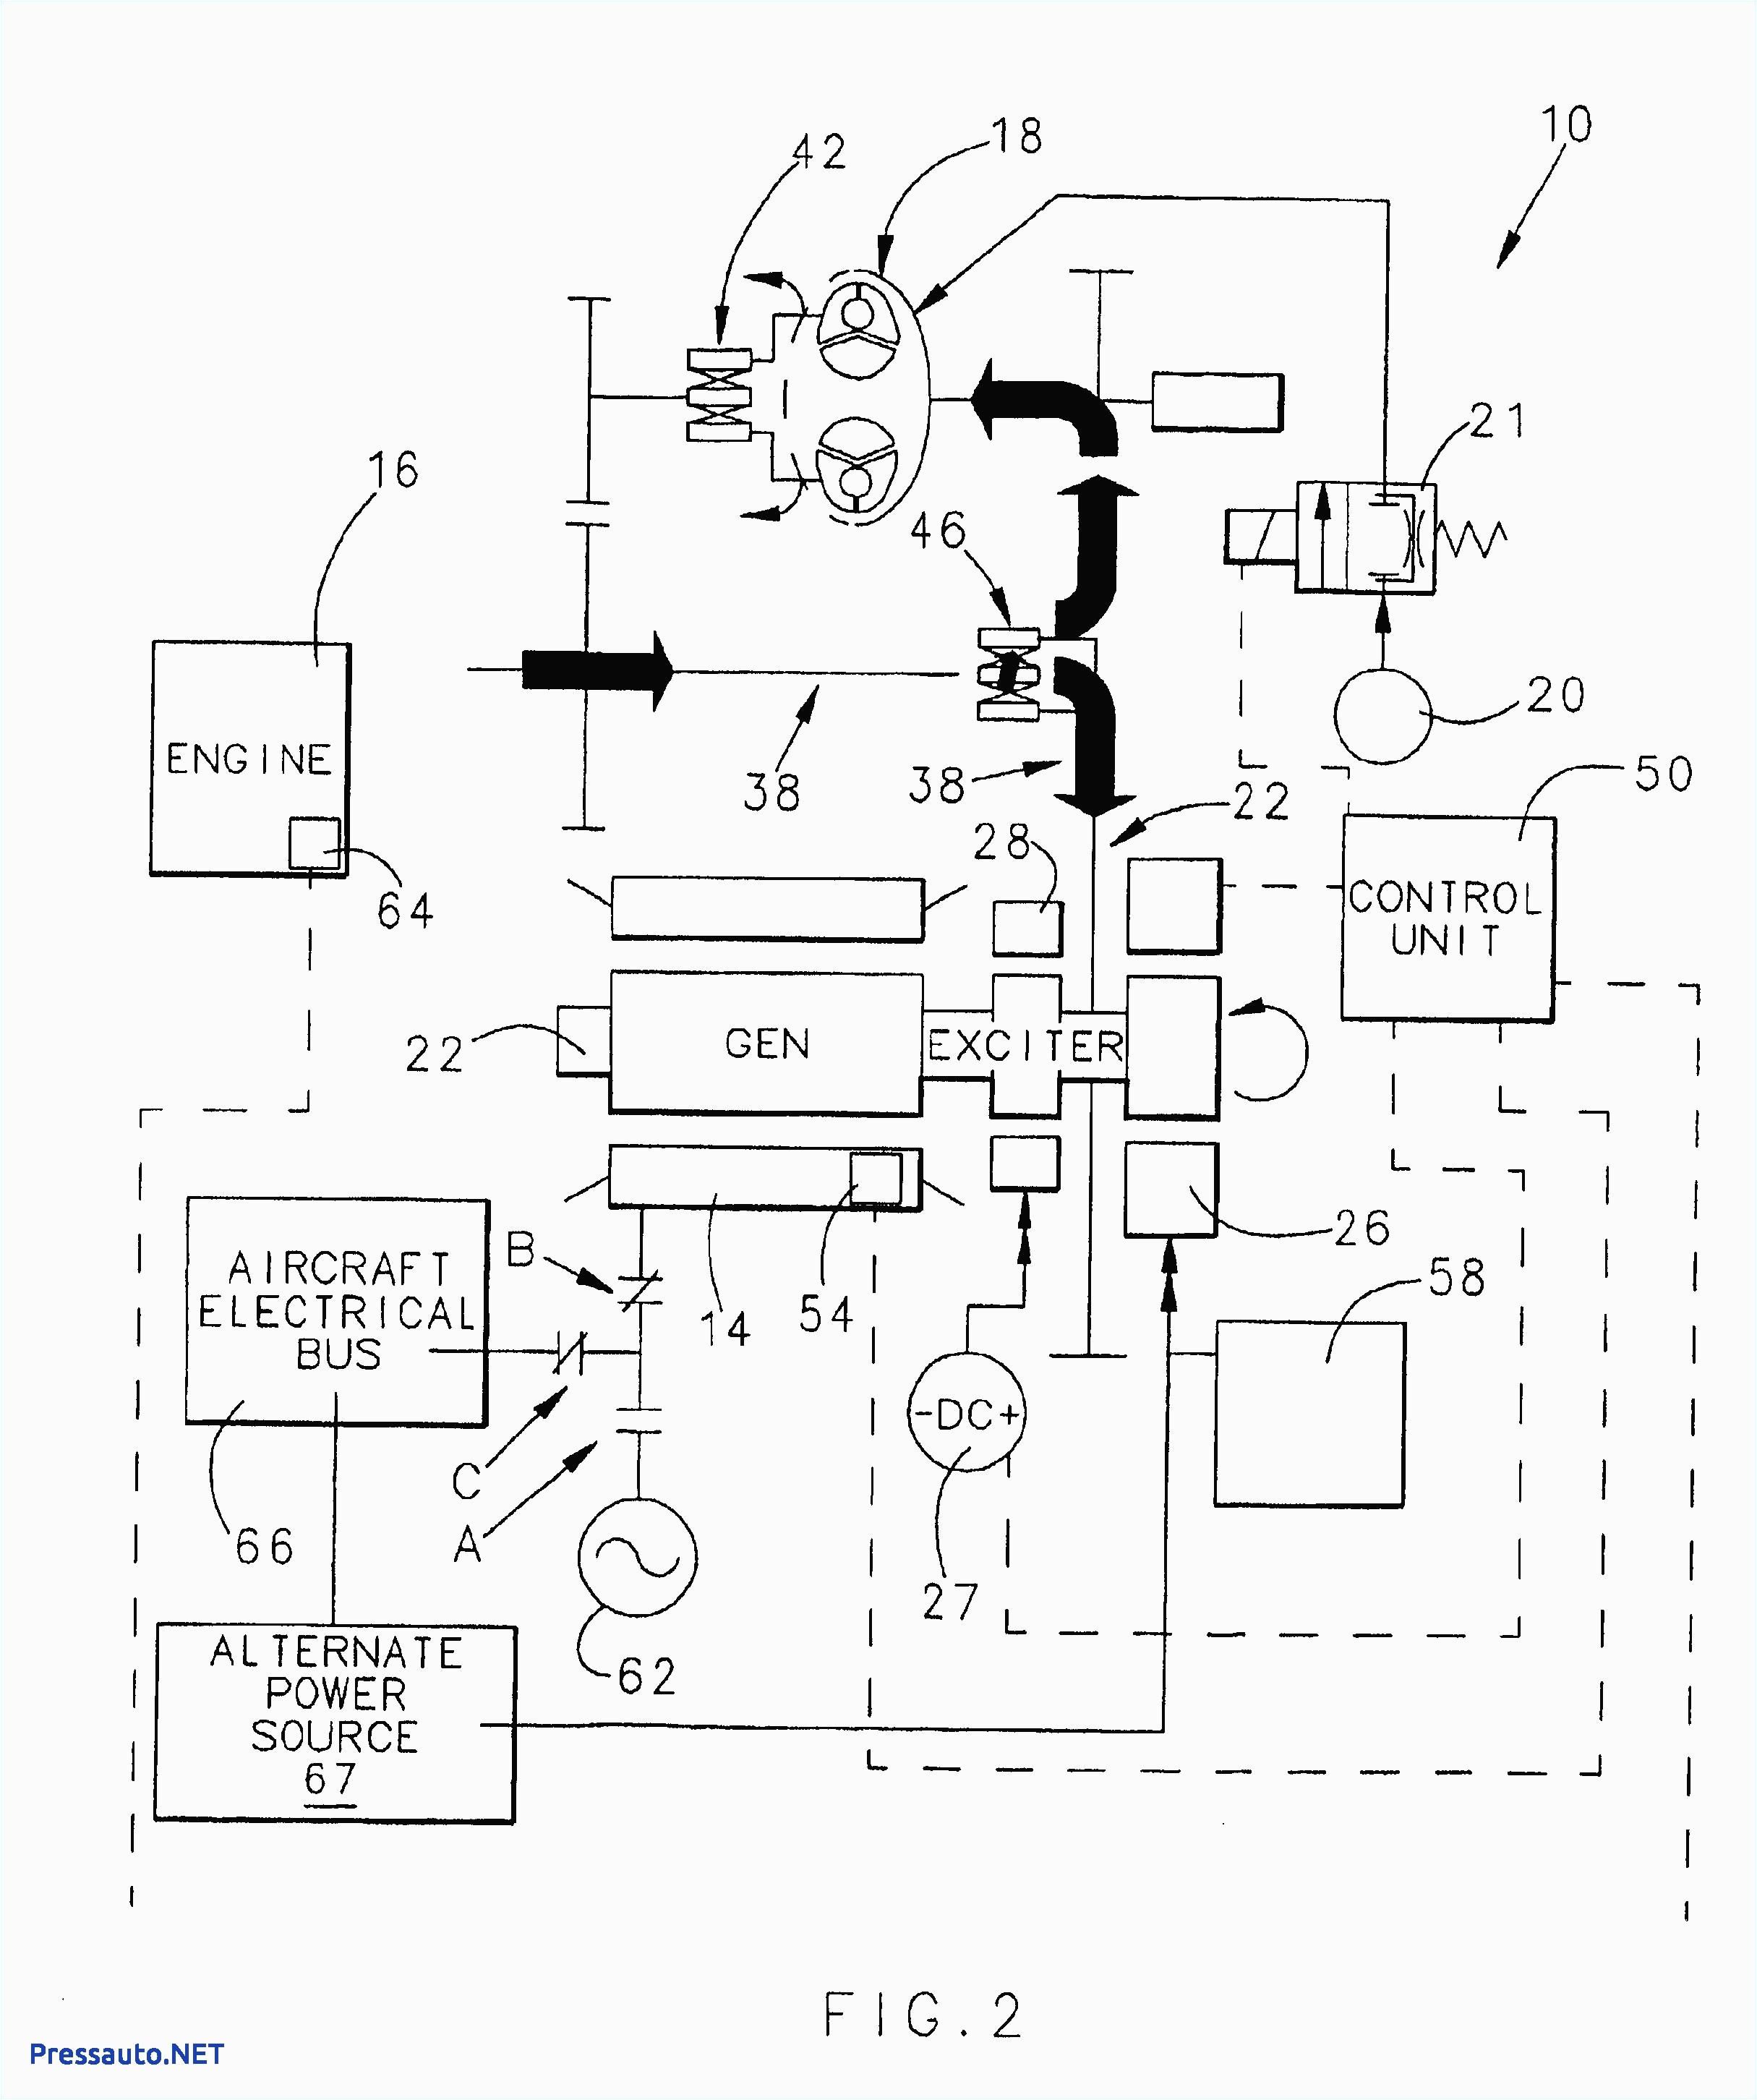 wire diagram allis chalmers b12 wiring diagram toolbox wiring diagram allis chalmers b12